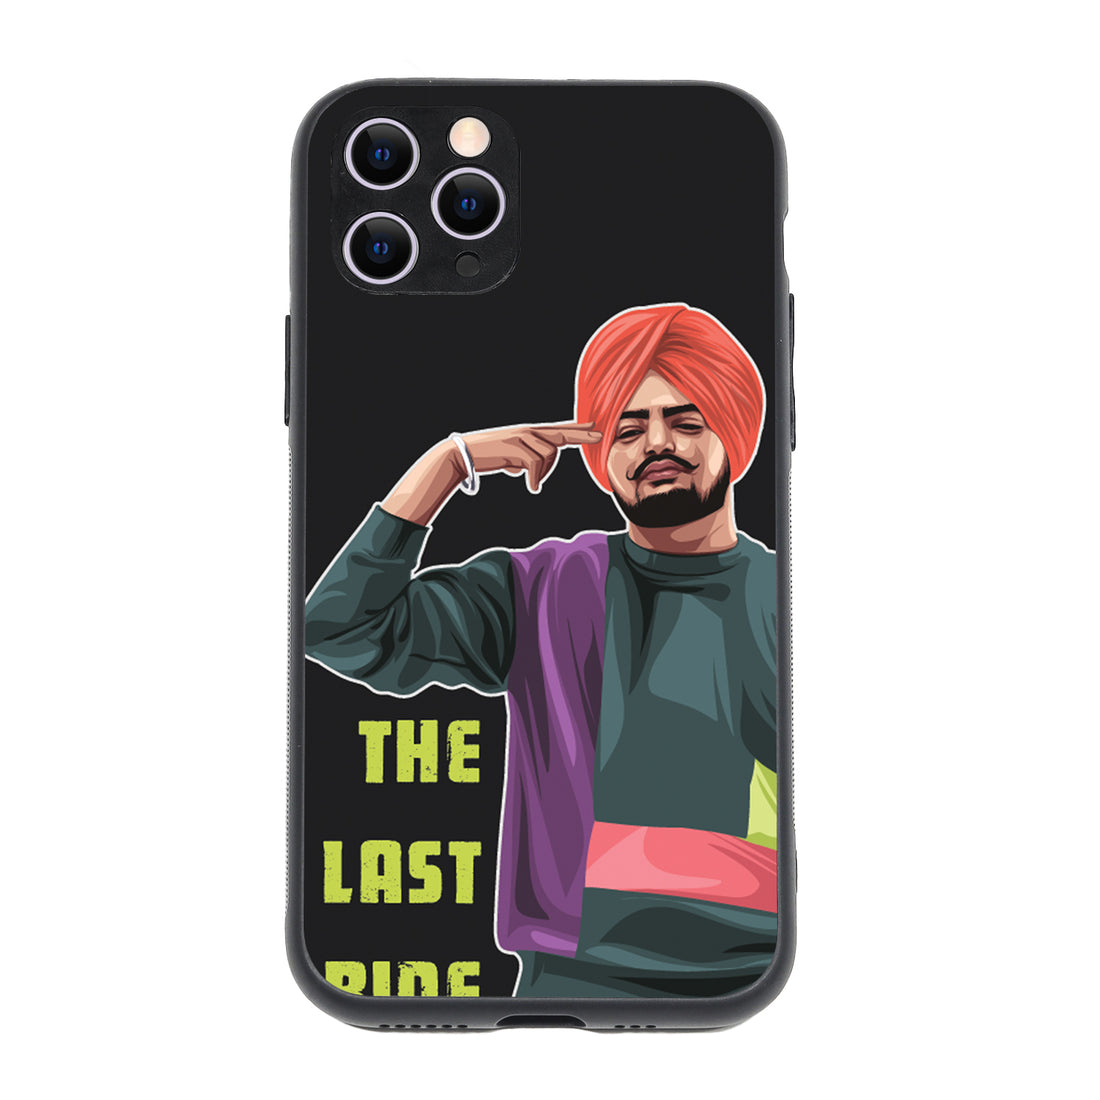 The Last Ride Sidhu Moosewala iPhone 11 Pro Case